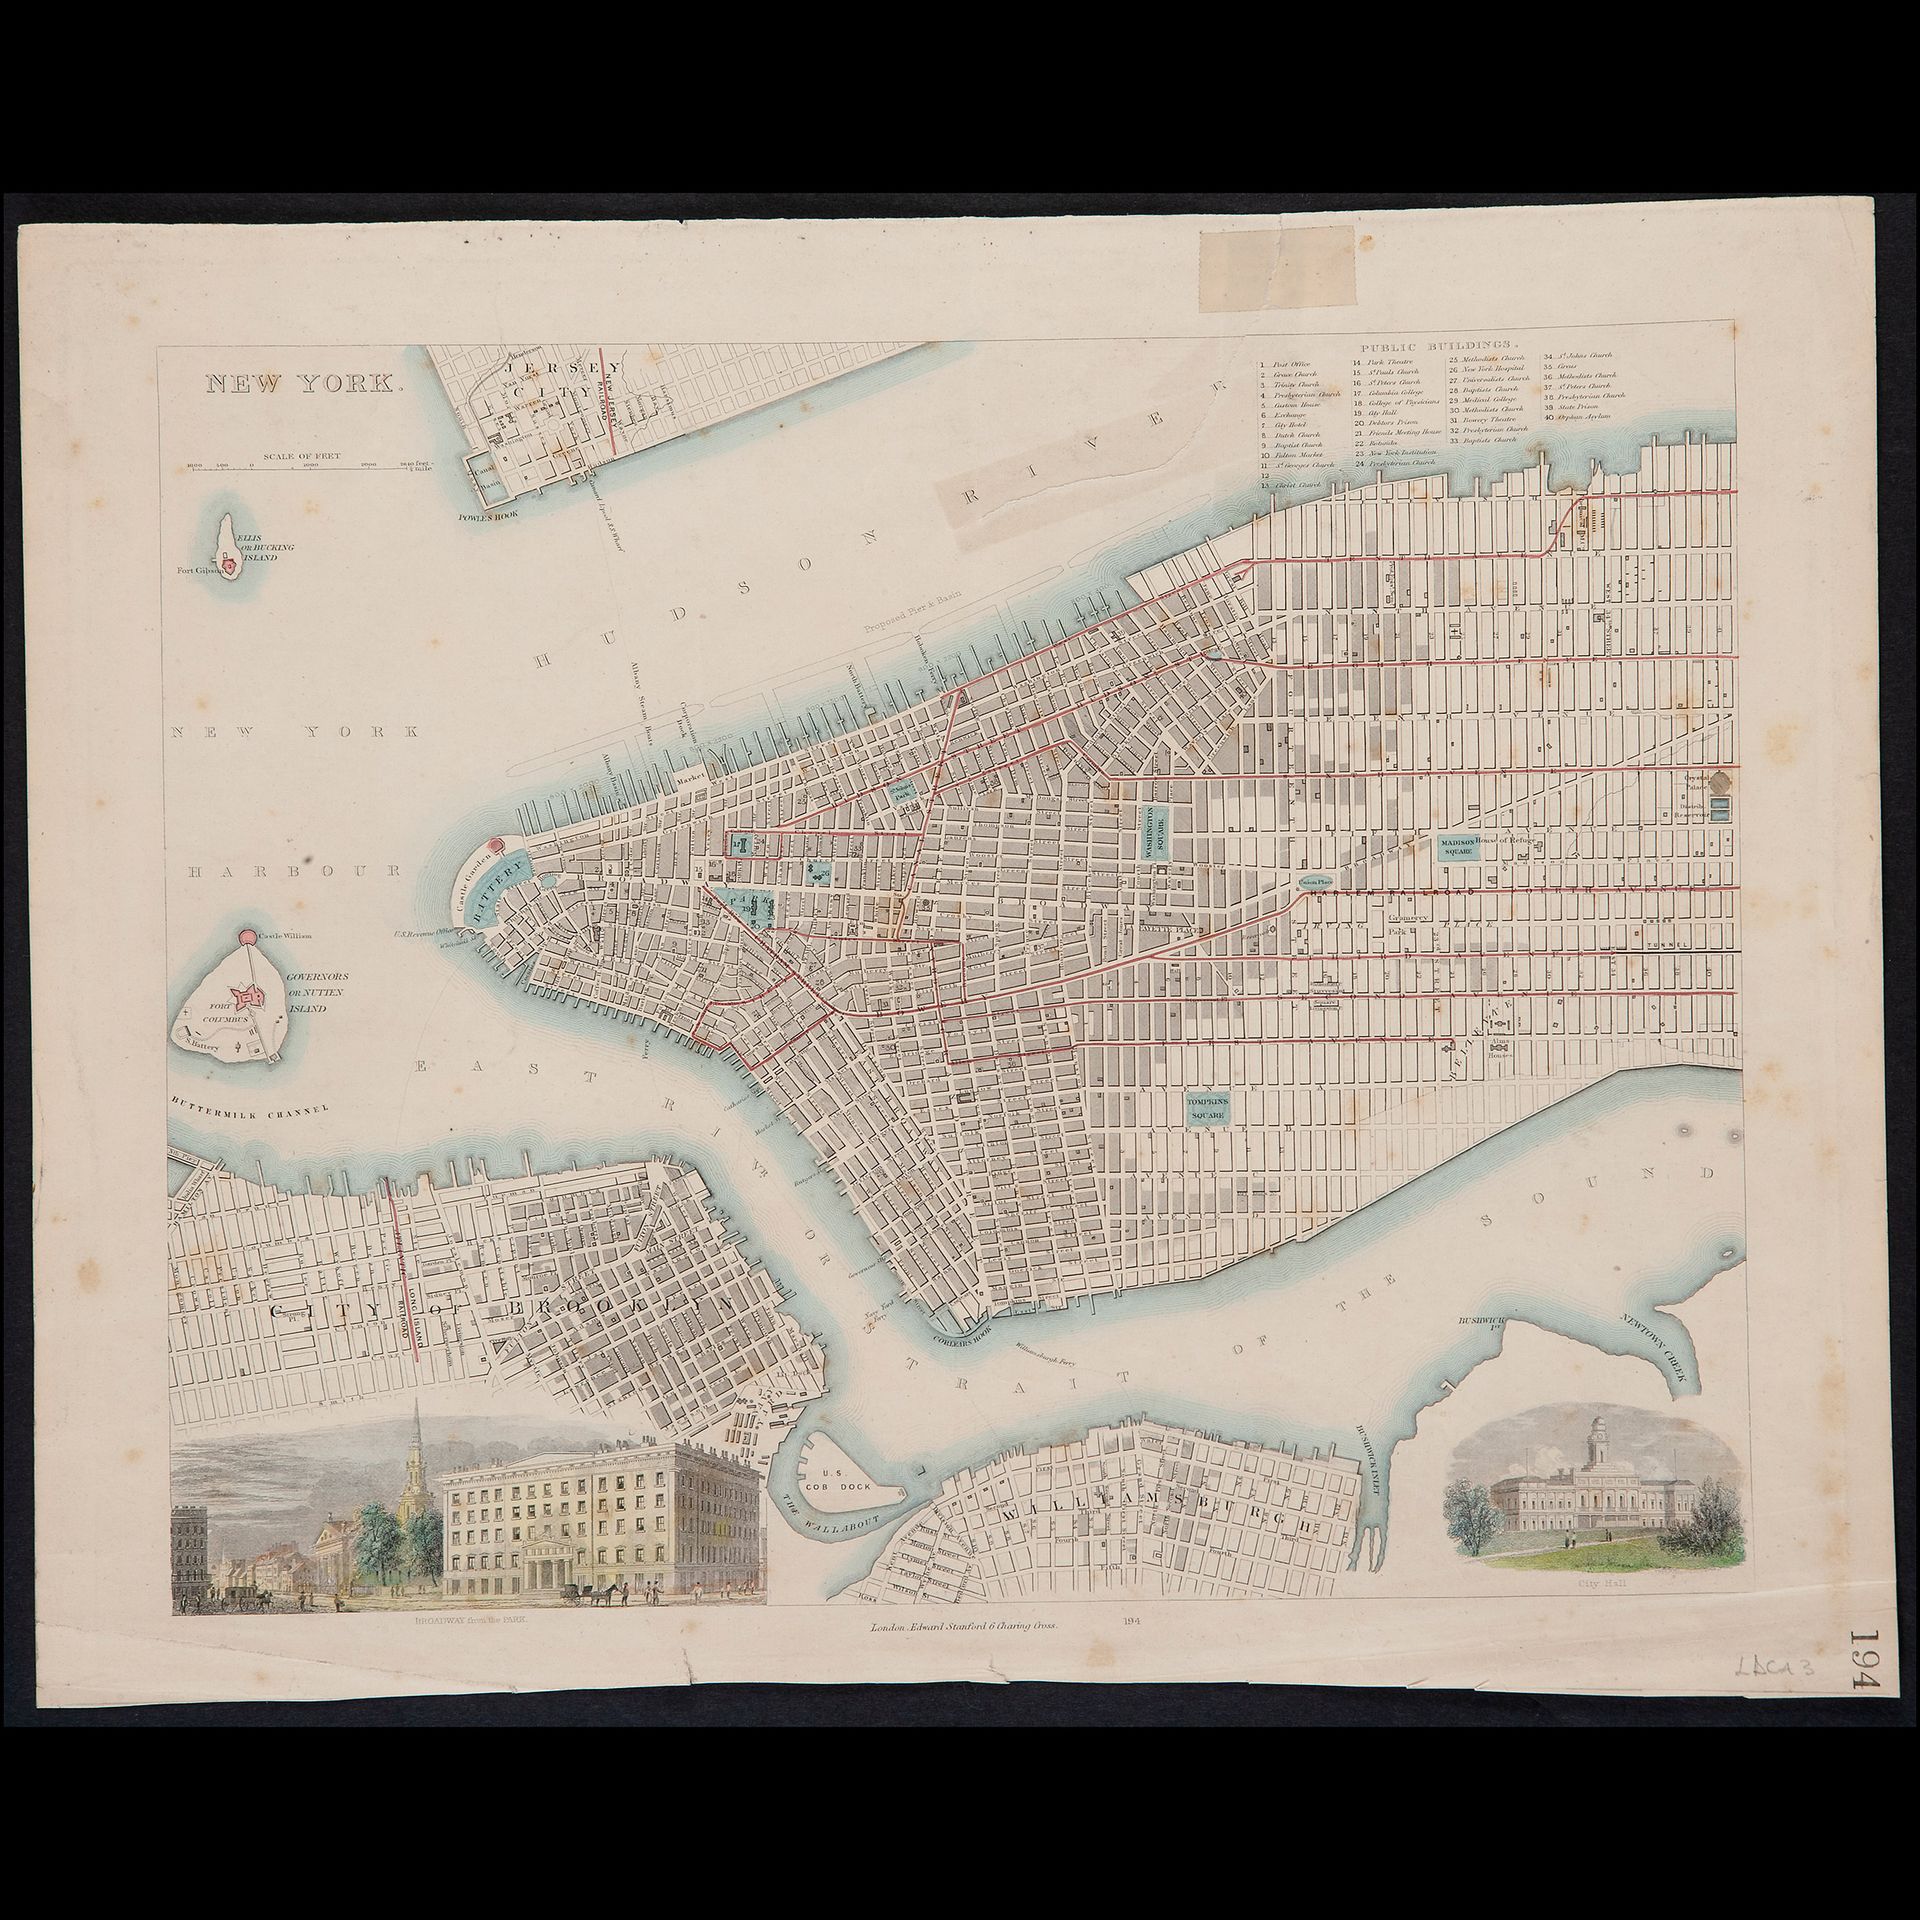 Map of New York, London 19th century 石版画可能来自英国建筑师威廉-巴纳德-克拉克（1806-1865）的图纸，底部刻有 "&hellip;